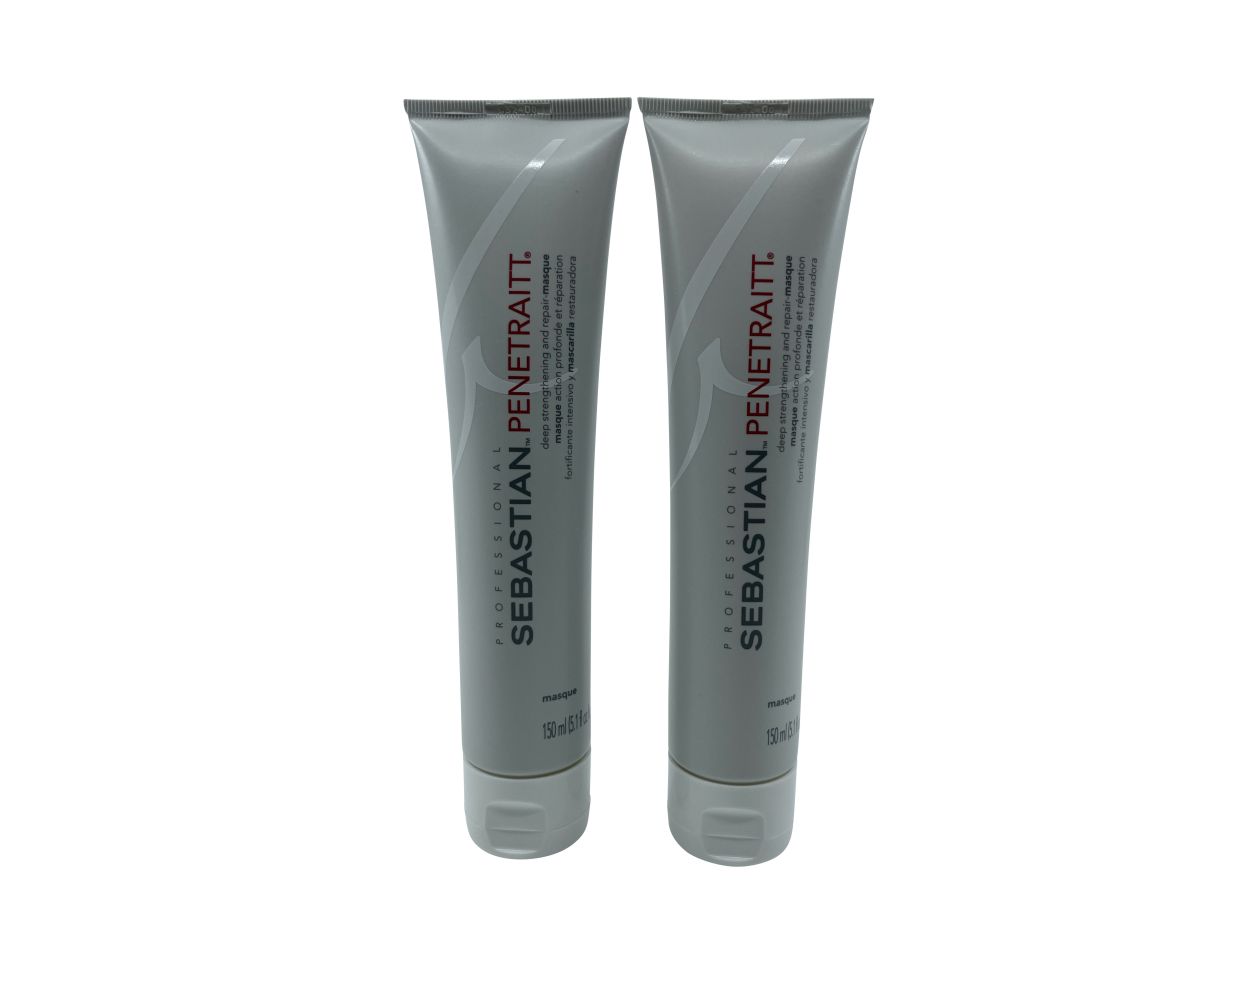 Sebastian Professional Strengthening & Repair Mask Set of 2 Hair Treatments - Beautyvice.com